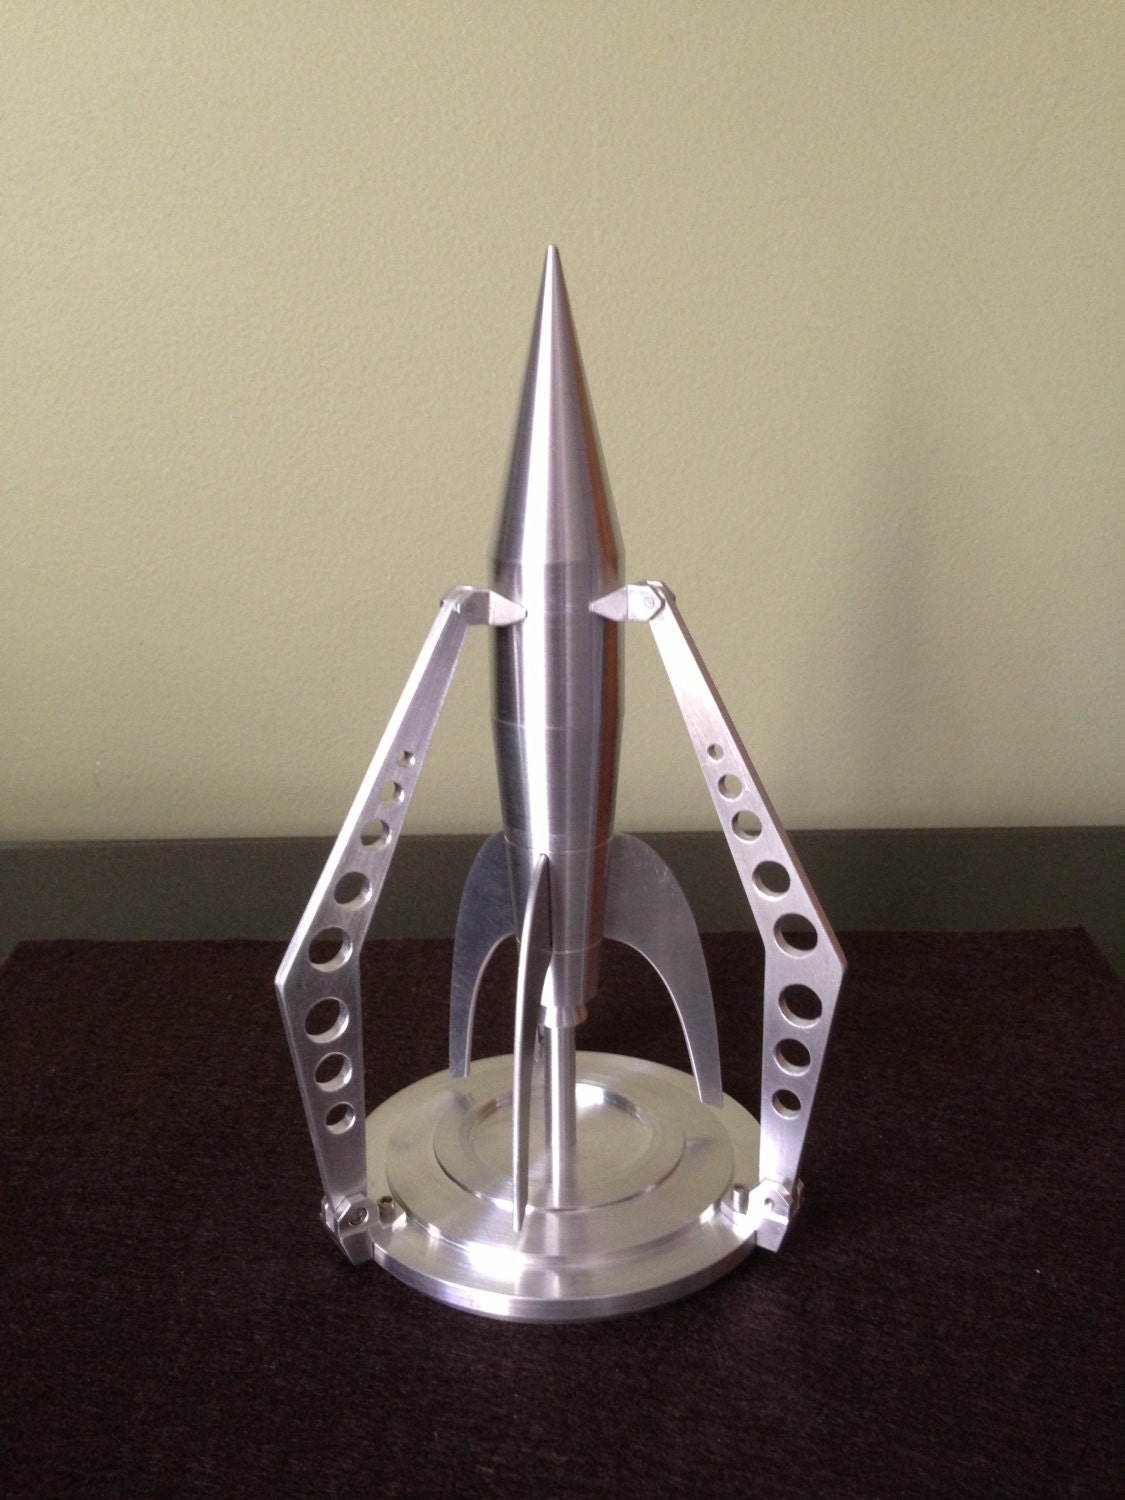 Rocket Art Metal Sculpture Small Desktop Design Science